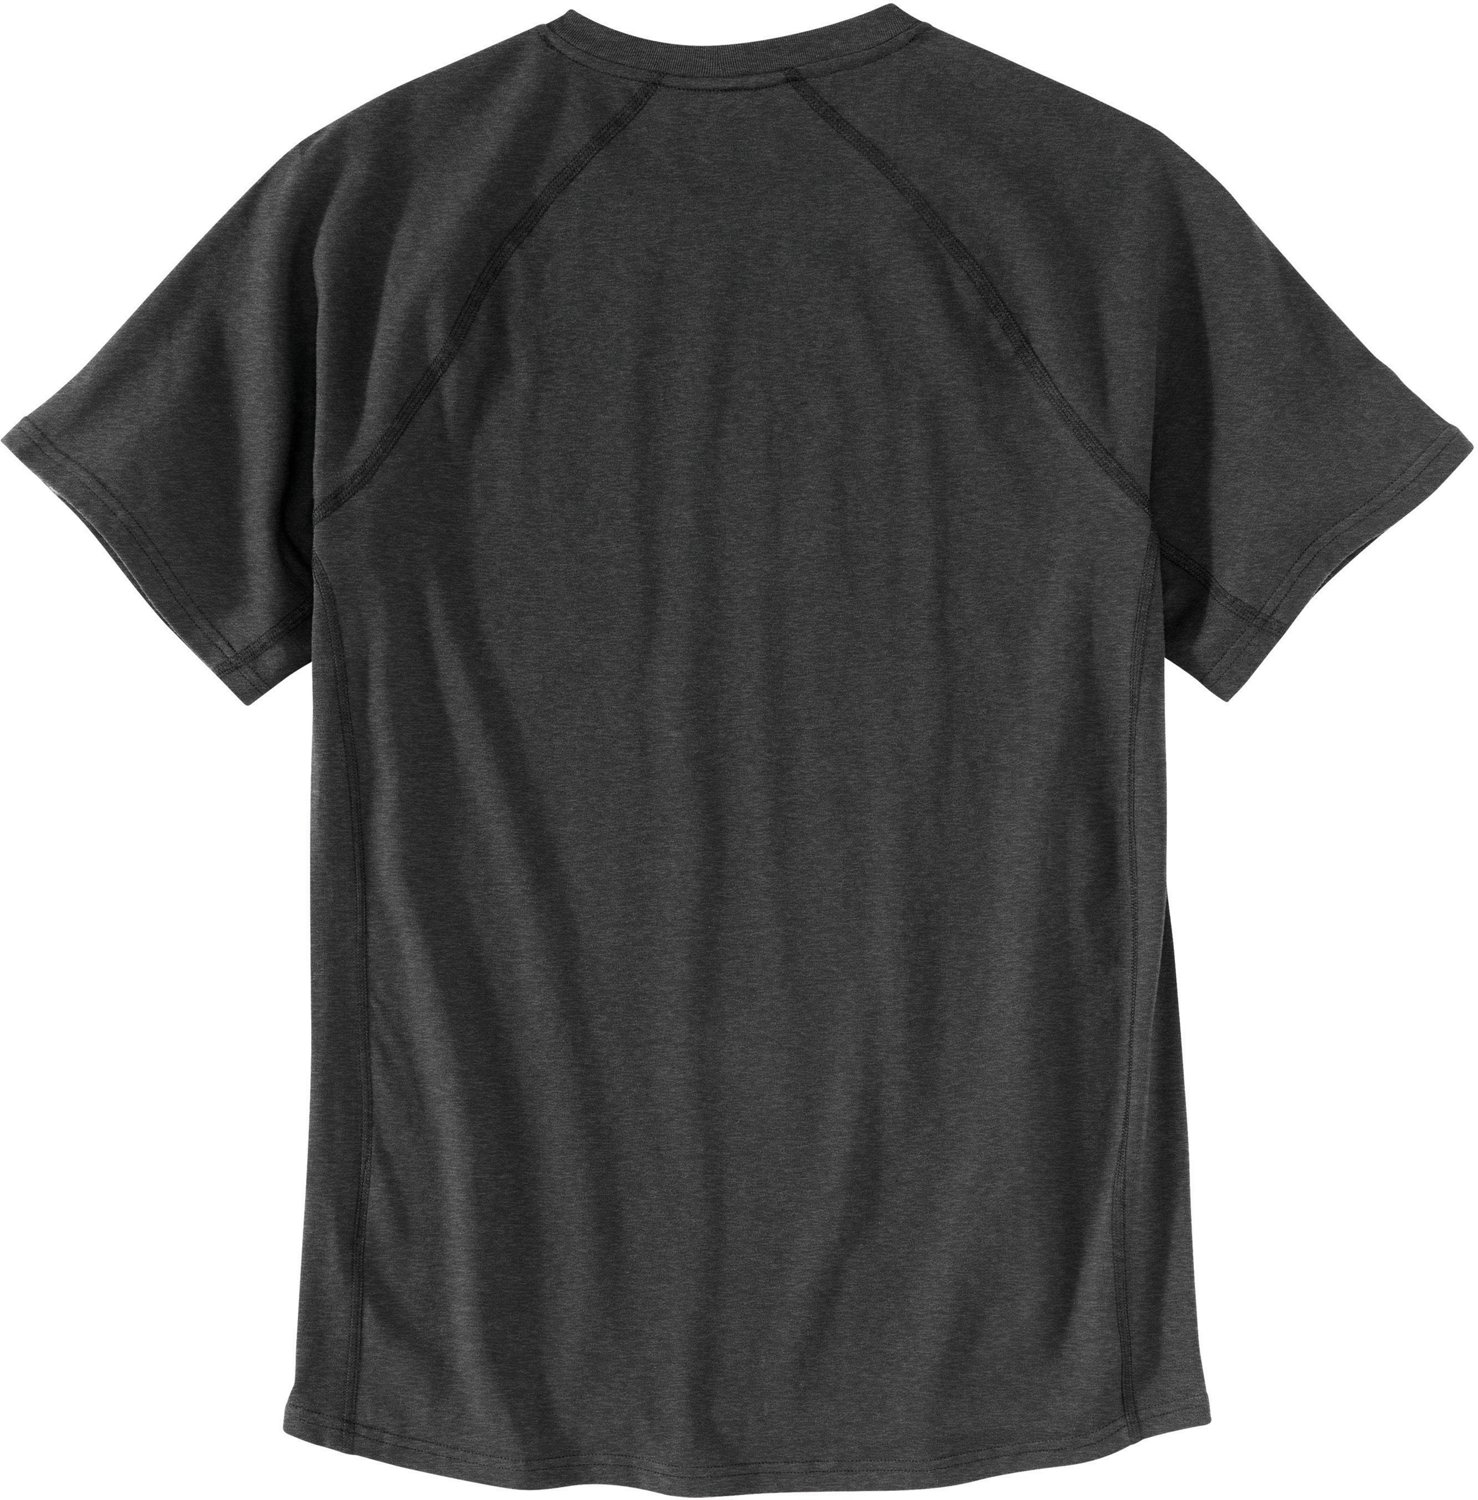 Buy Carhartt Force Sun Defender Short-Sleeve Graphic T-Shirt